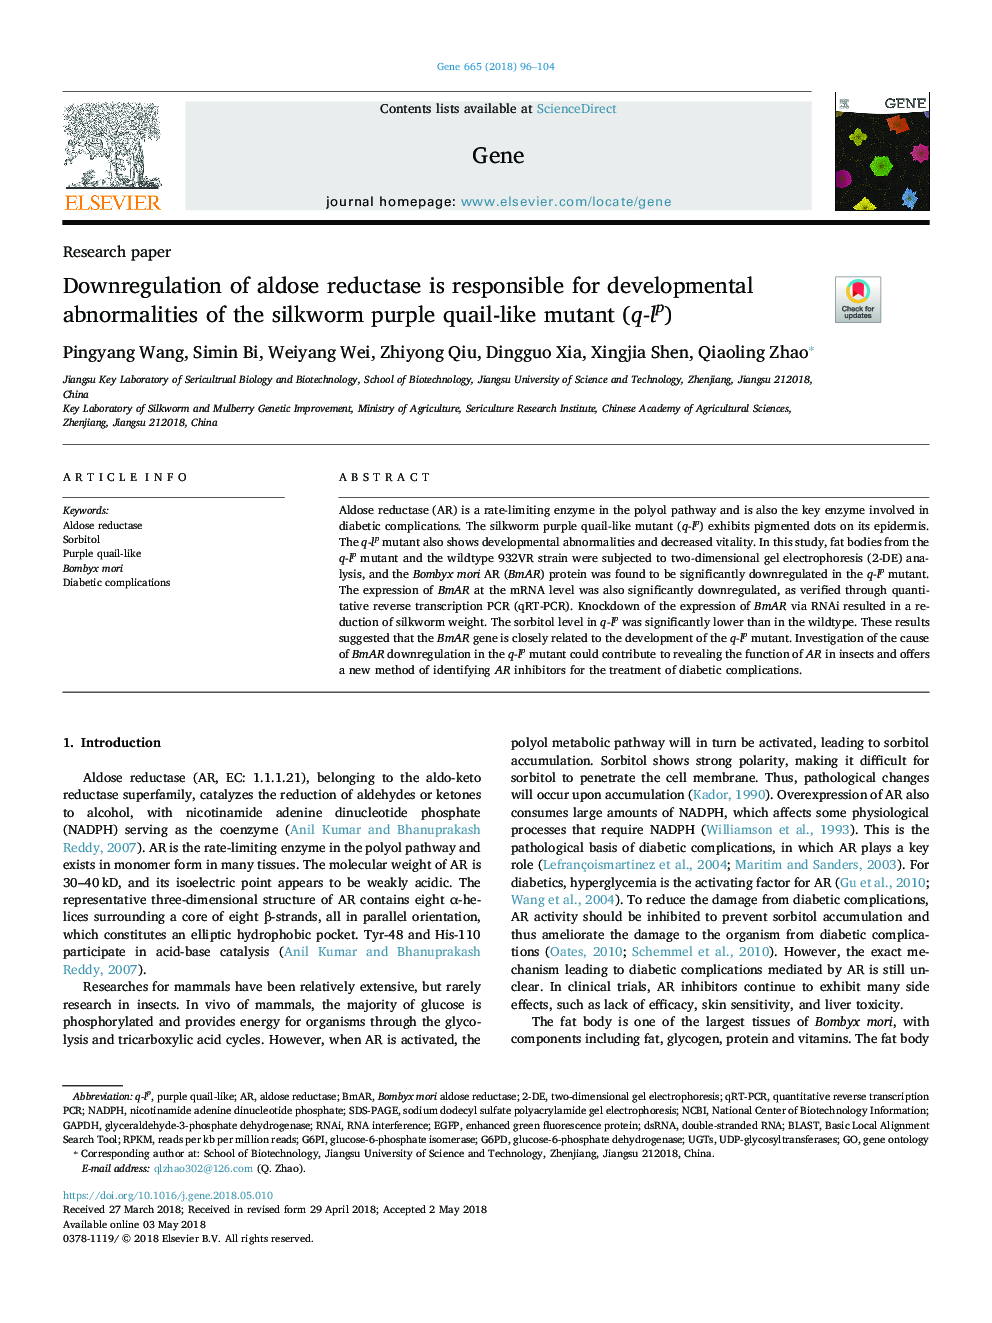 Downregulation of aldose reductase is responsible for developmental abnormalities of the silkworm purple quail-like mutant (q-lp)